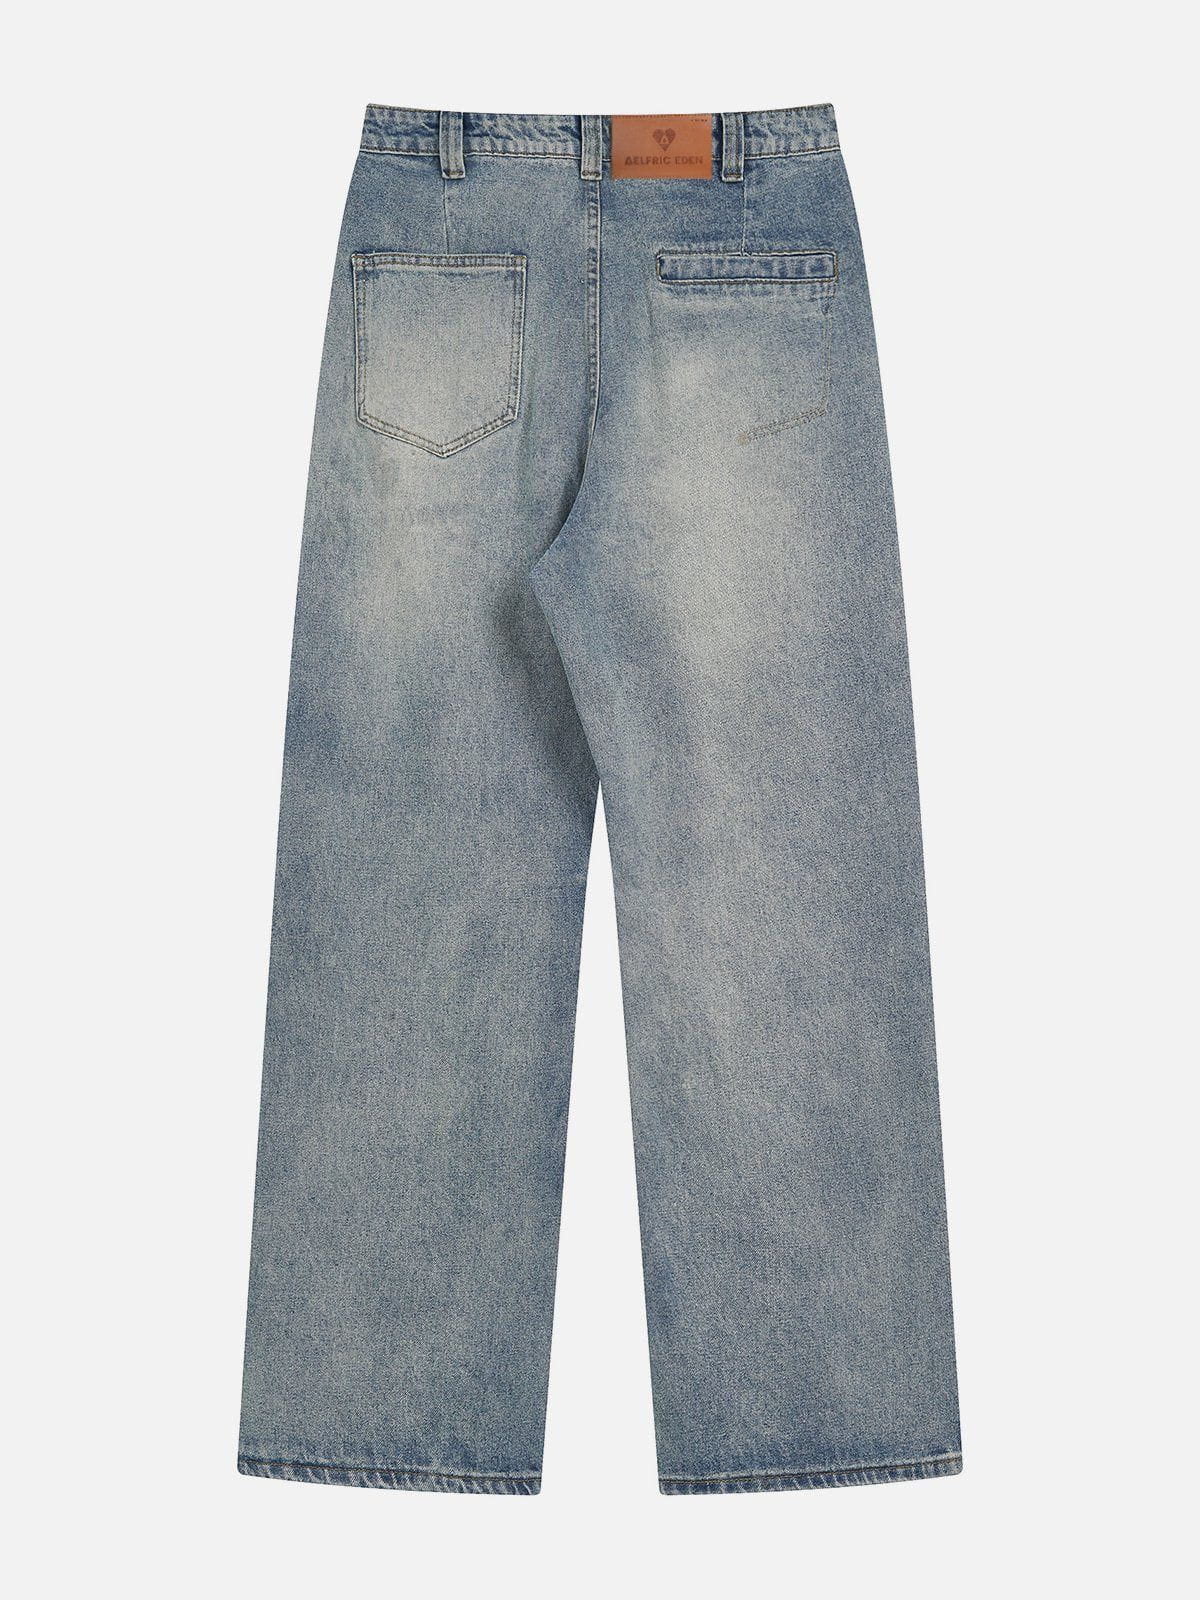 Aelfric Eden Asymmetrical Pocket Jeans